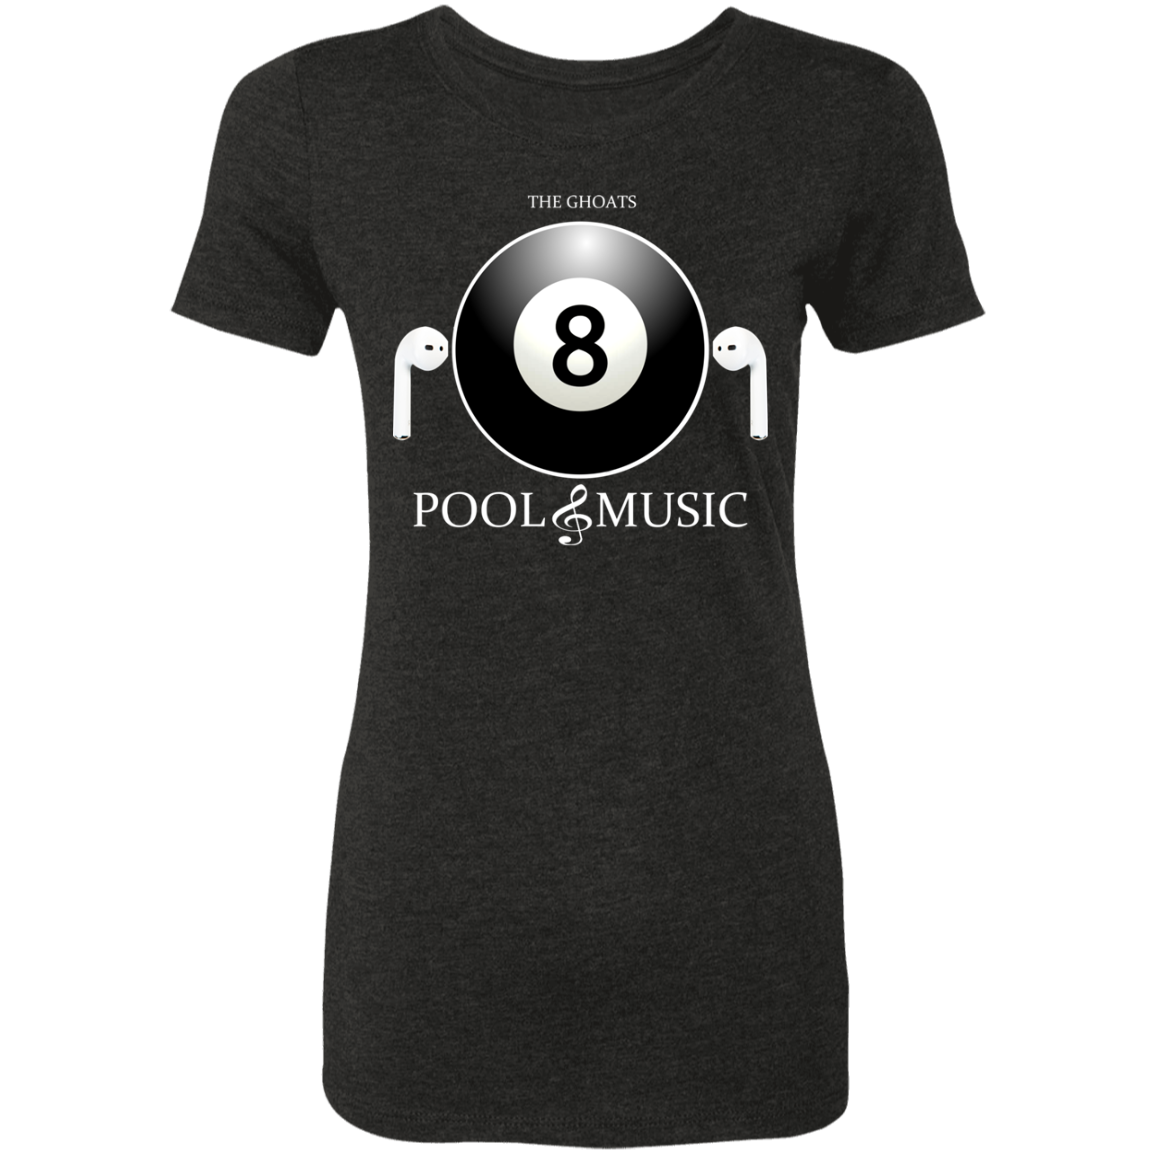 The GHOATS Custom Design. #19 Pool & Music. Ladies' Triblend T-Shirt